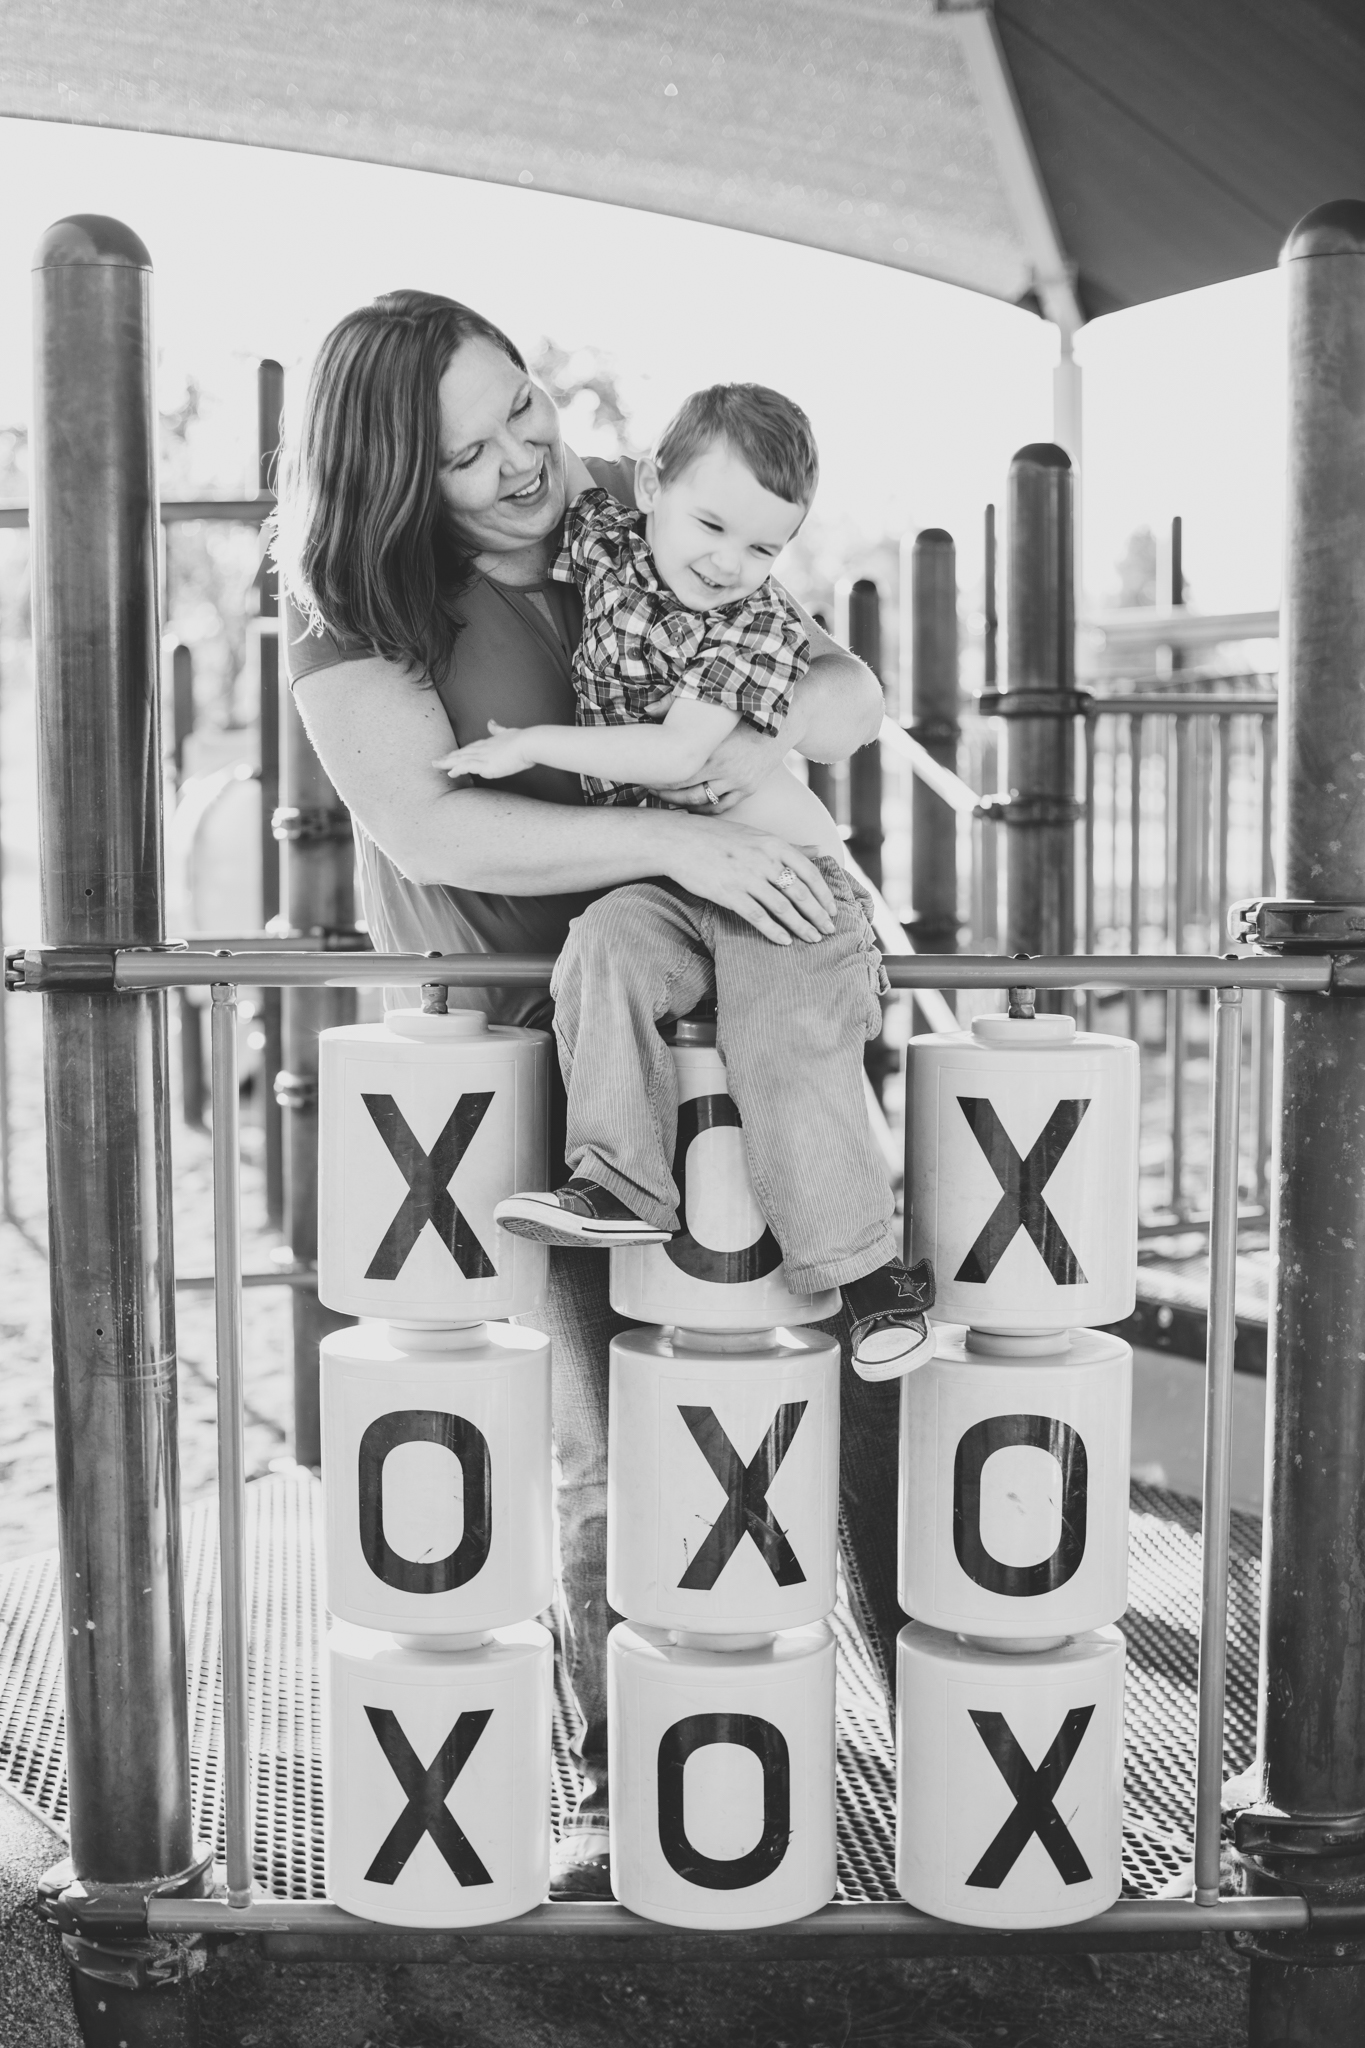 vanessa and her son xoxo bw chaparral park scottsdale az